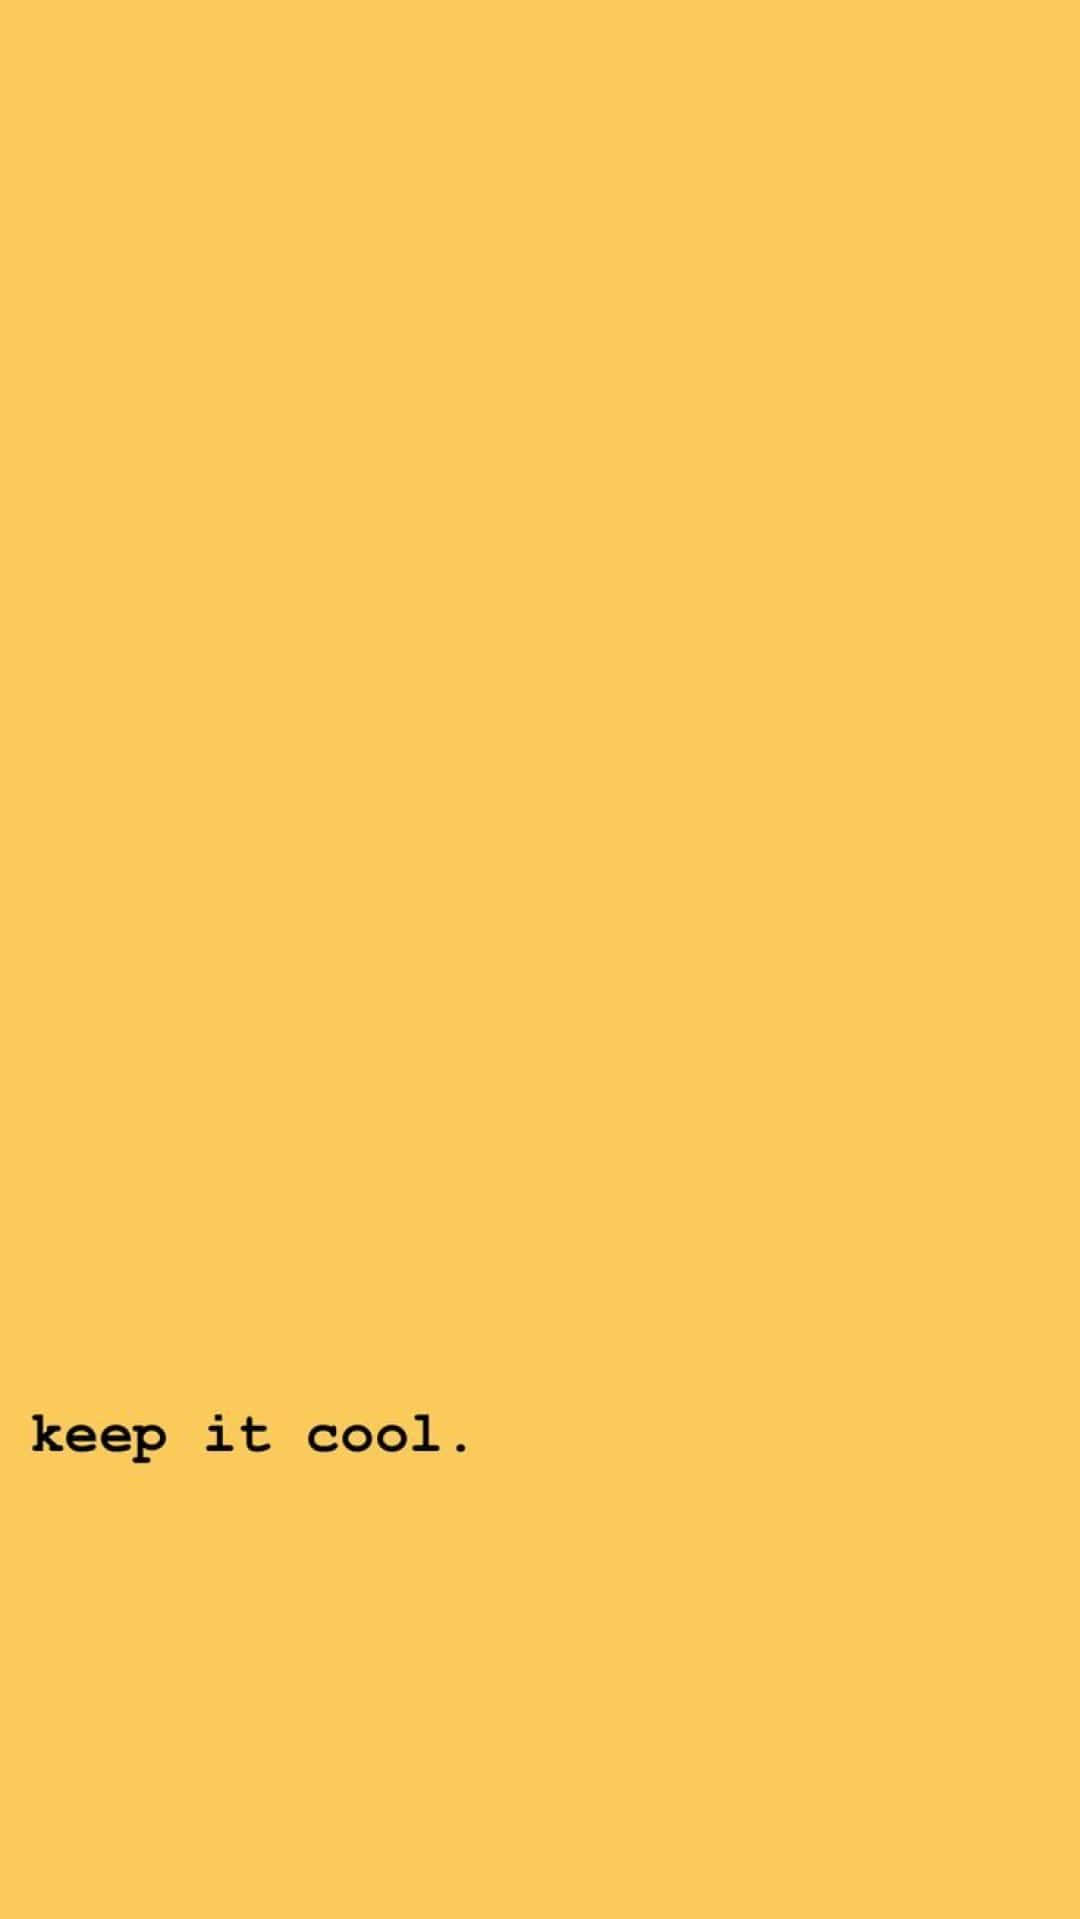 Keep It Cool